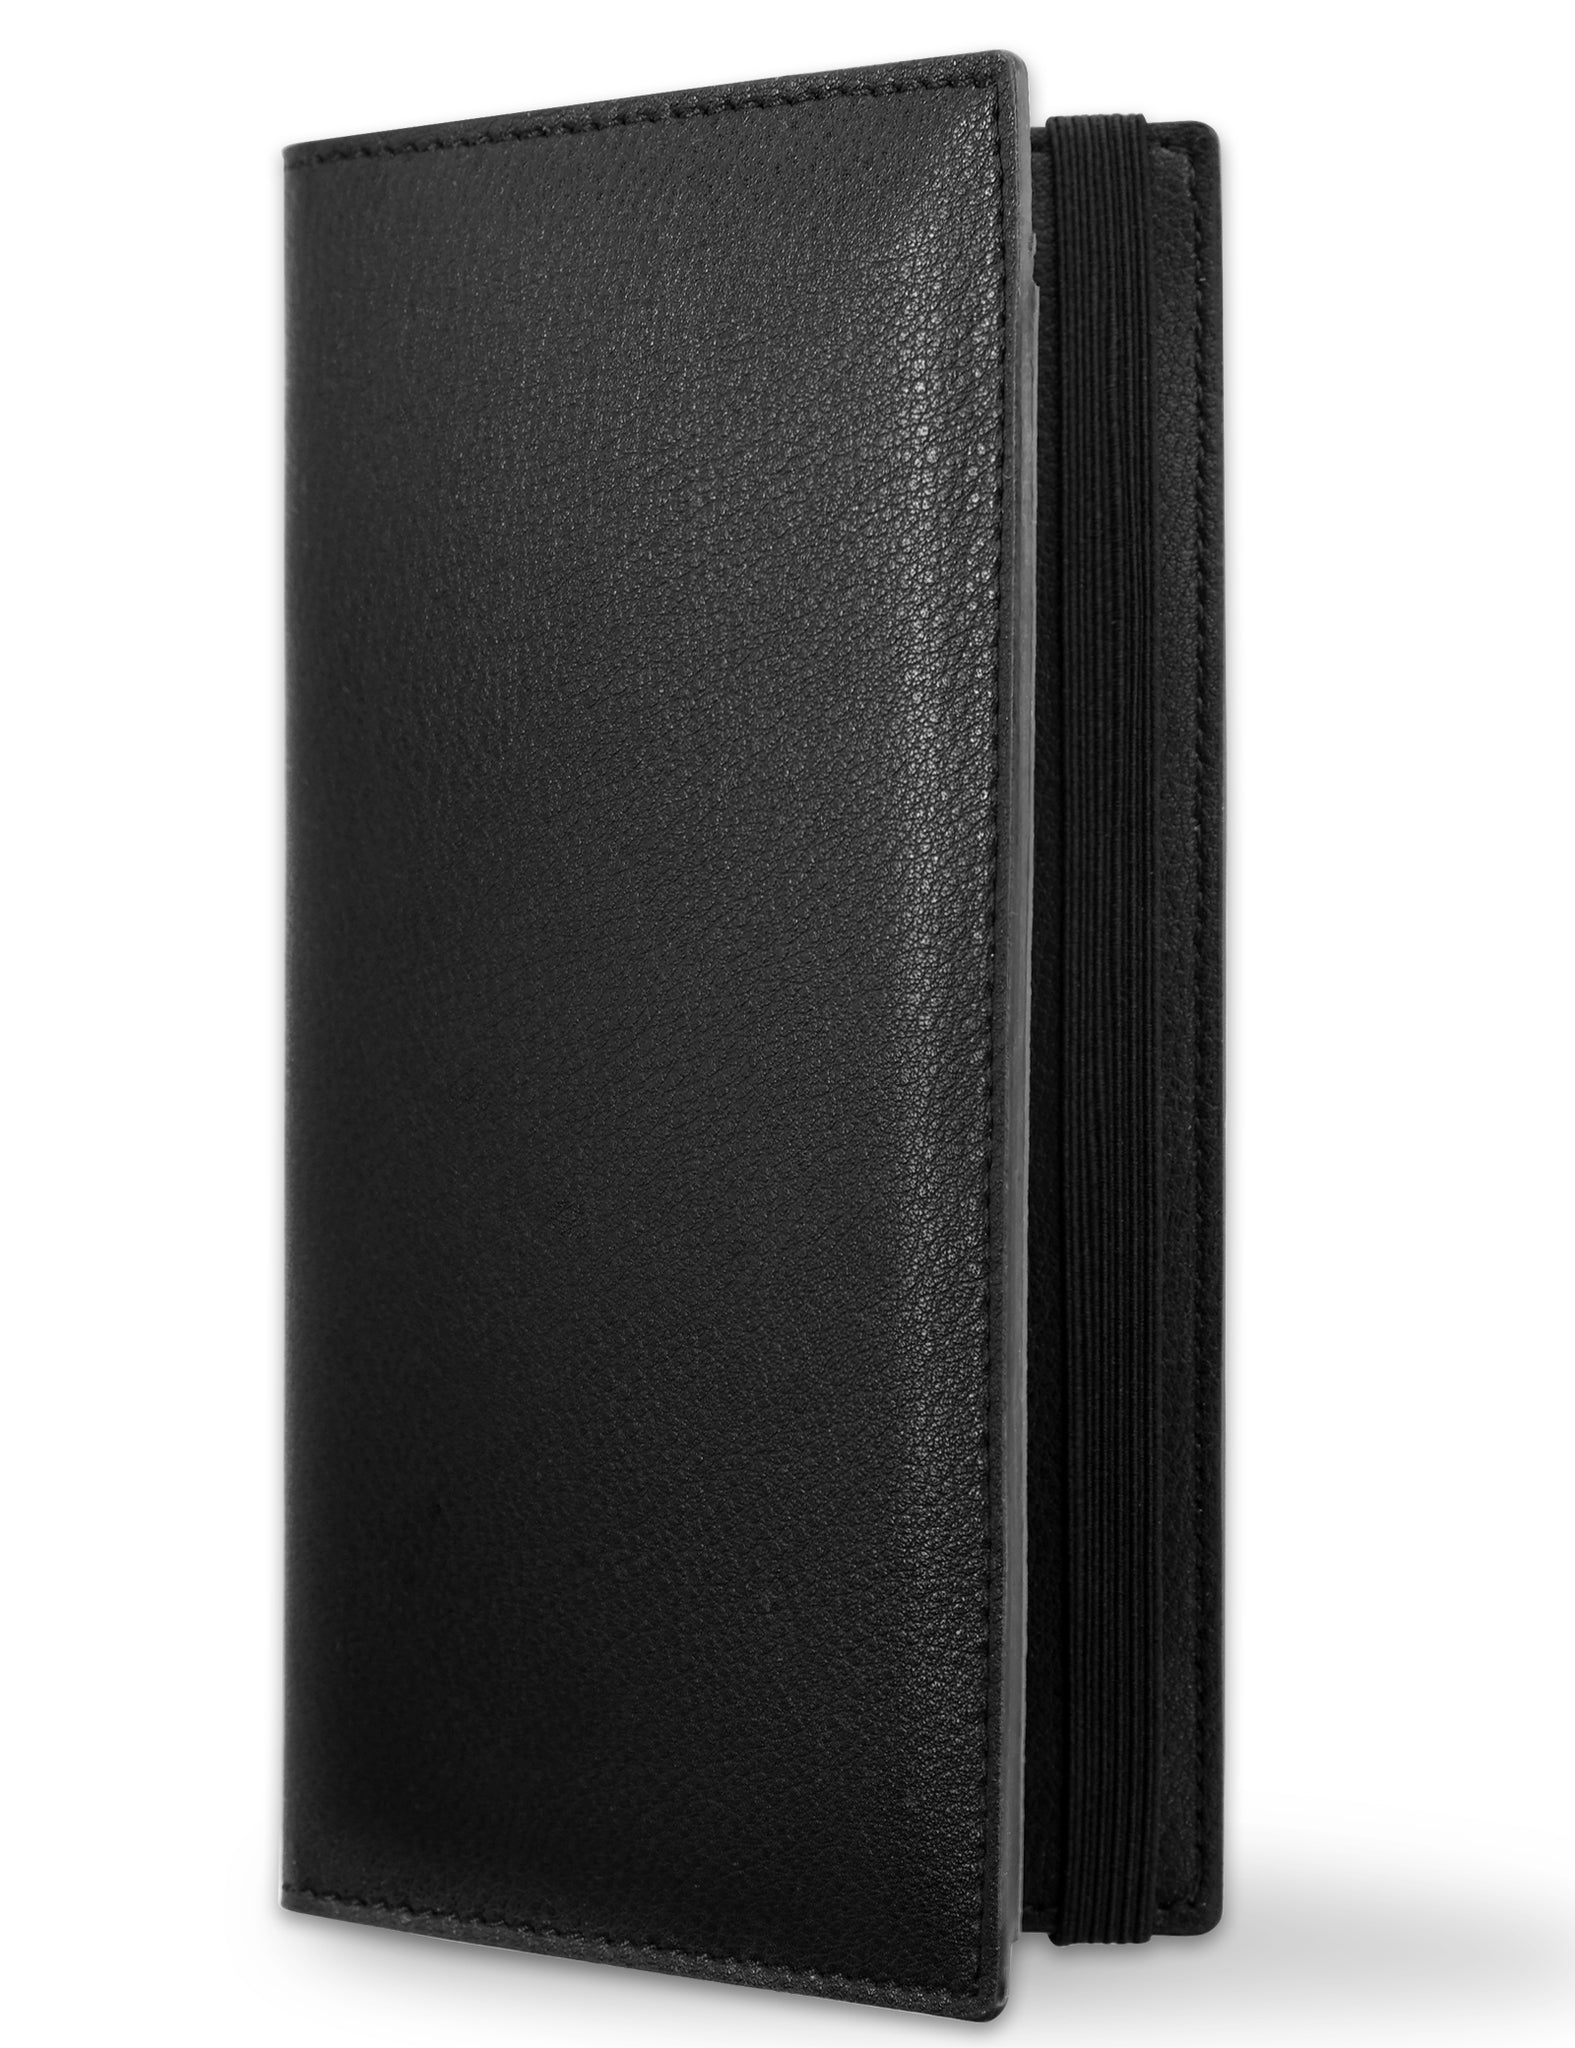 7"x3.5" Black Vegan Leather Checkbook Cover